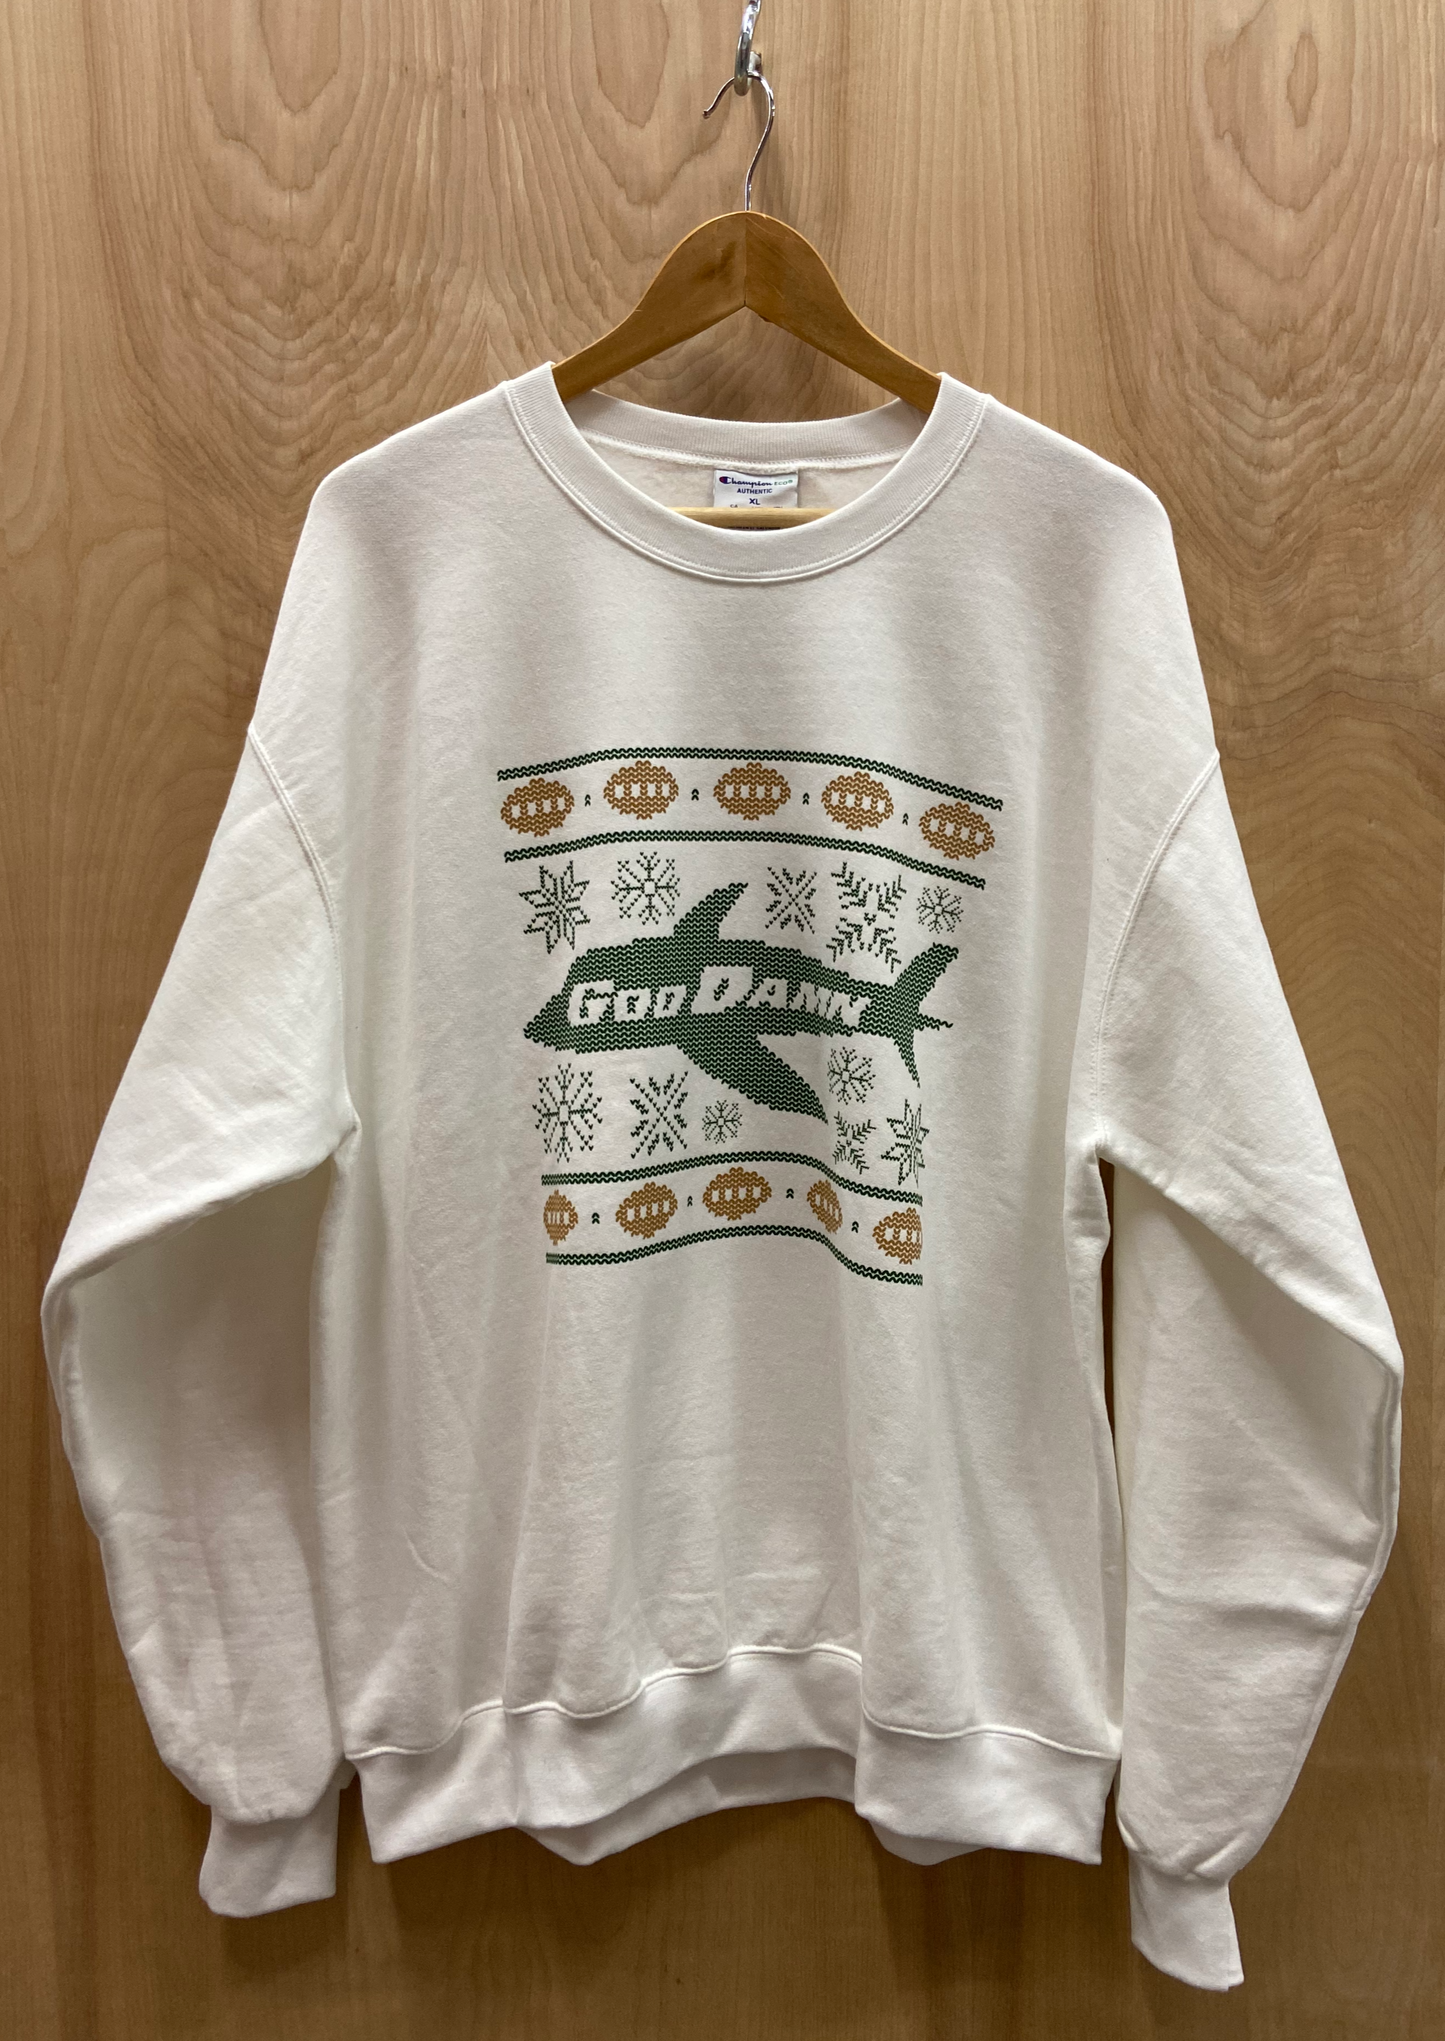 Barstool Sports Jets  Sweater (XL)